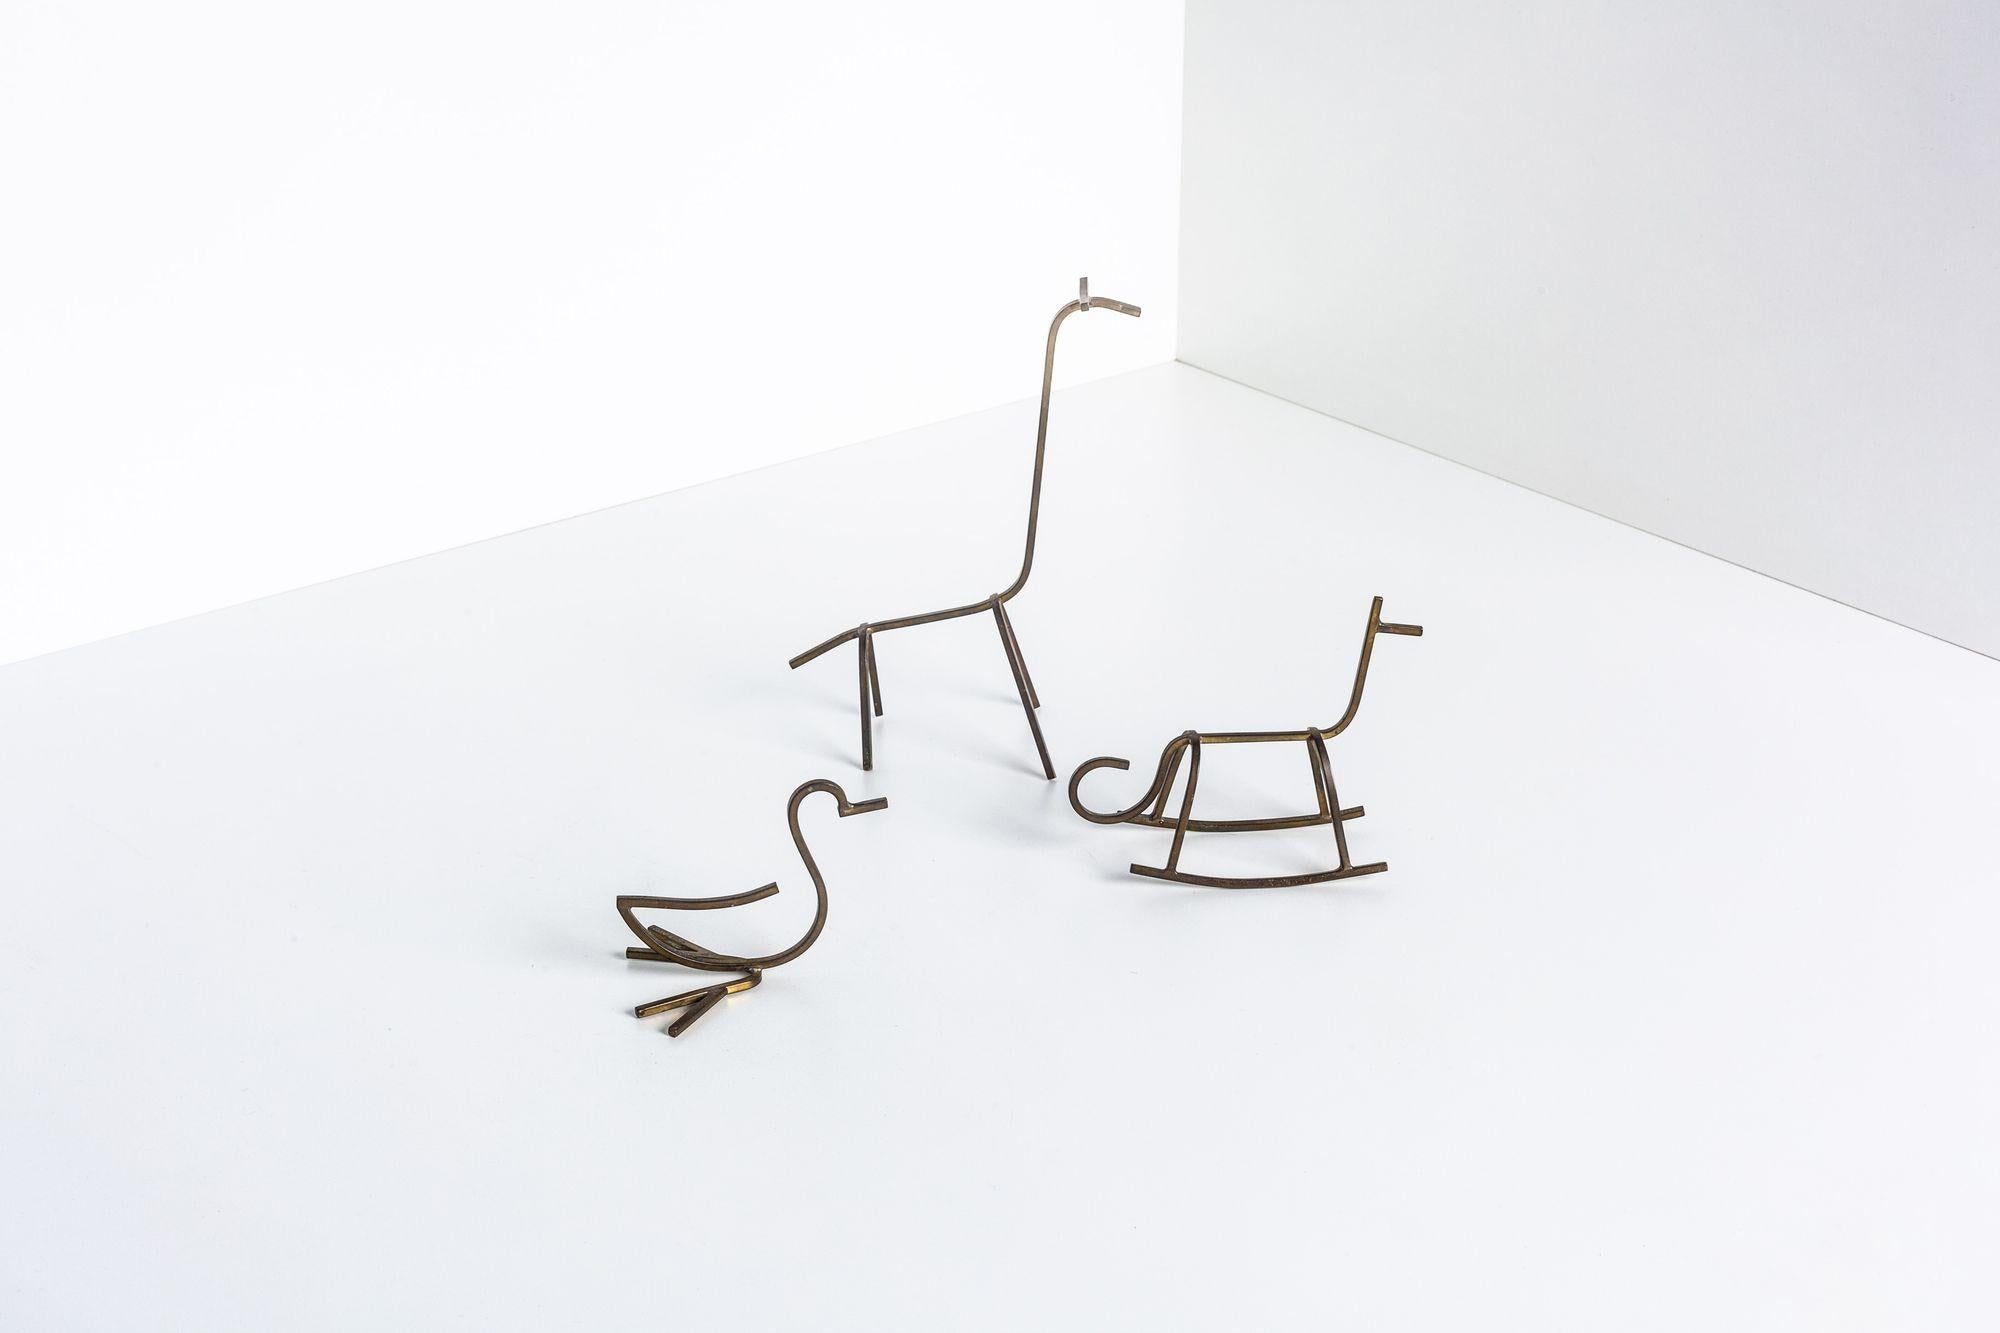 Simon Kops set of Solid Brass Minimalist Animal Sculptures;
Hand made Giraffe, Duck and Horse
Signed underside of each, Simon Kops
Giraffe 7.50